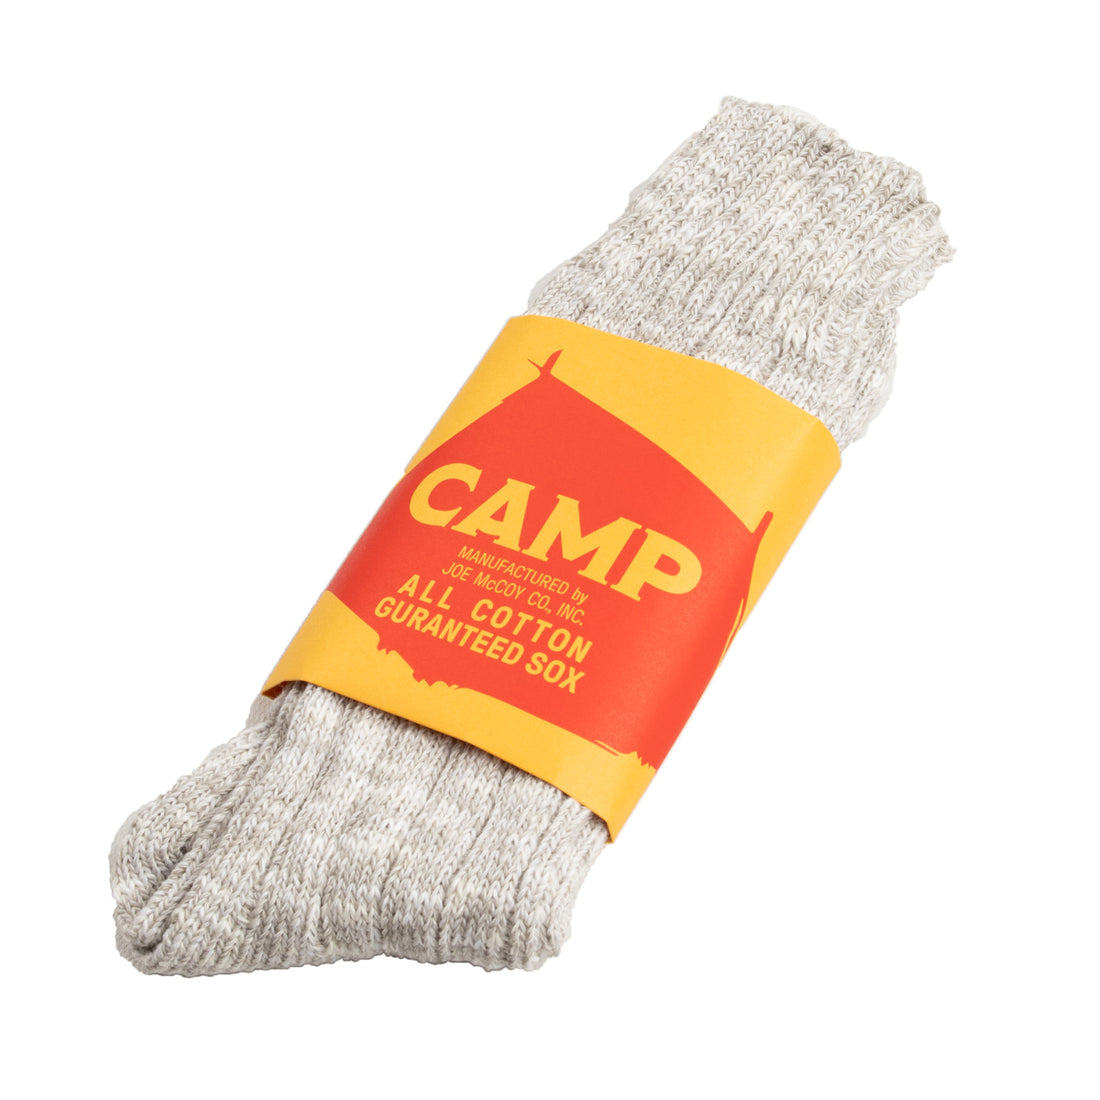 The Real McCoy's Outdoor Socks "Camp" - Snow Gray - Standard & Strange